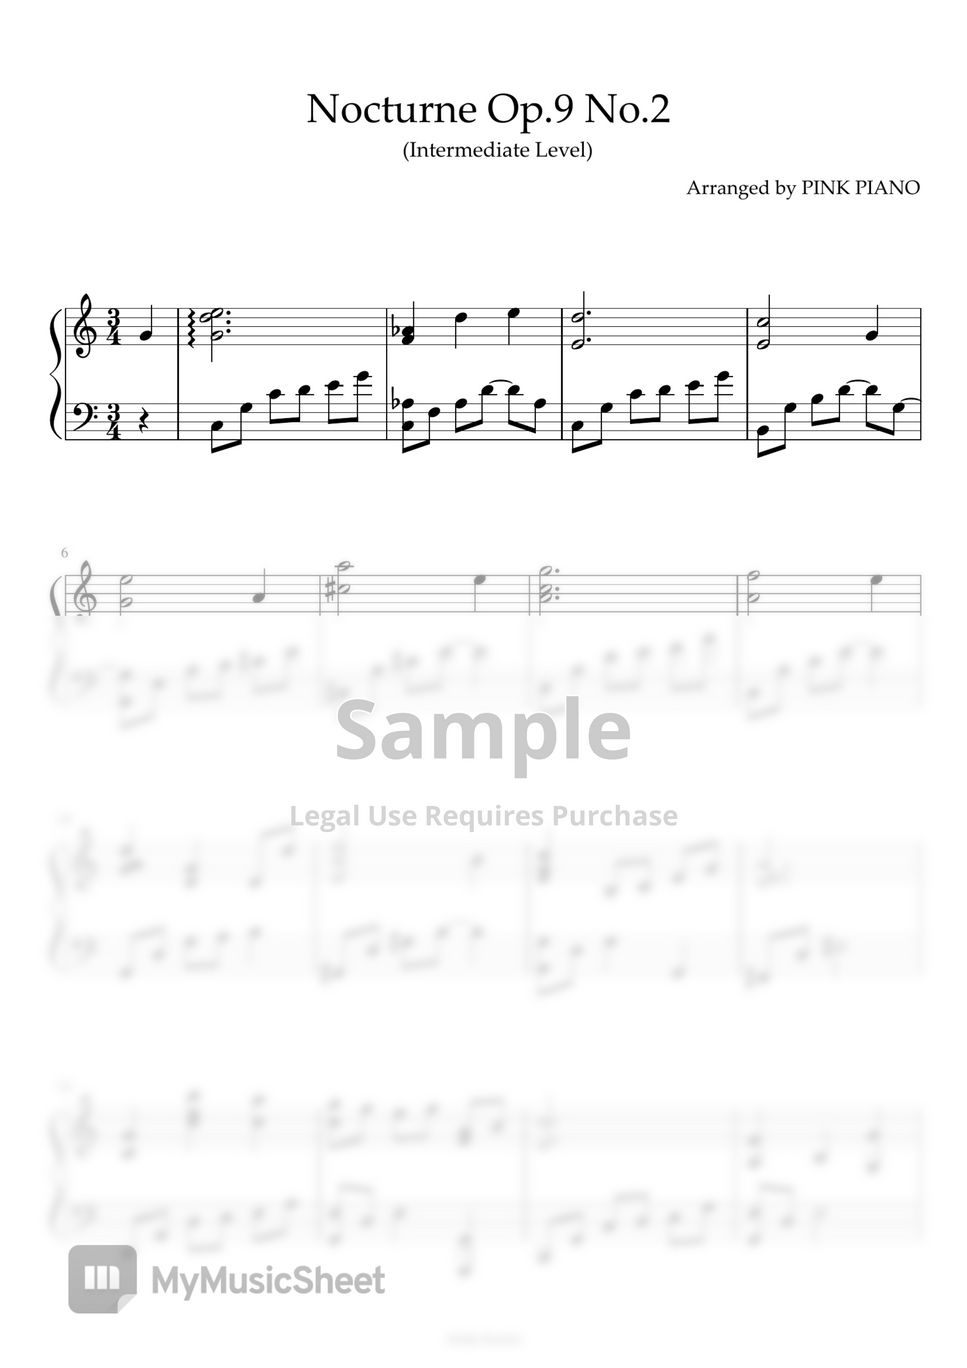 Chopin - Chopin Nocturne - New Age Version (Intermediate Level) Chopin - Nocturne Op.9 No.2 by PINK PIANO